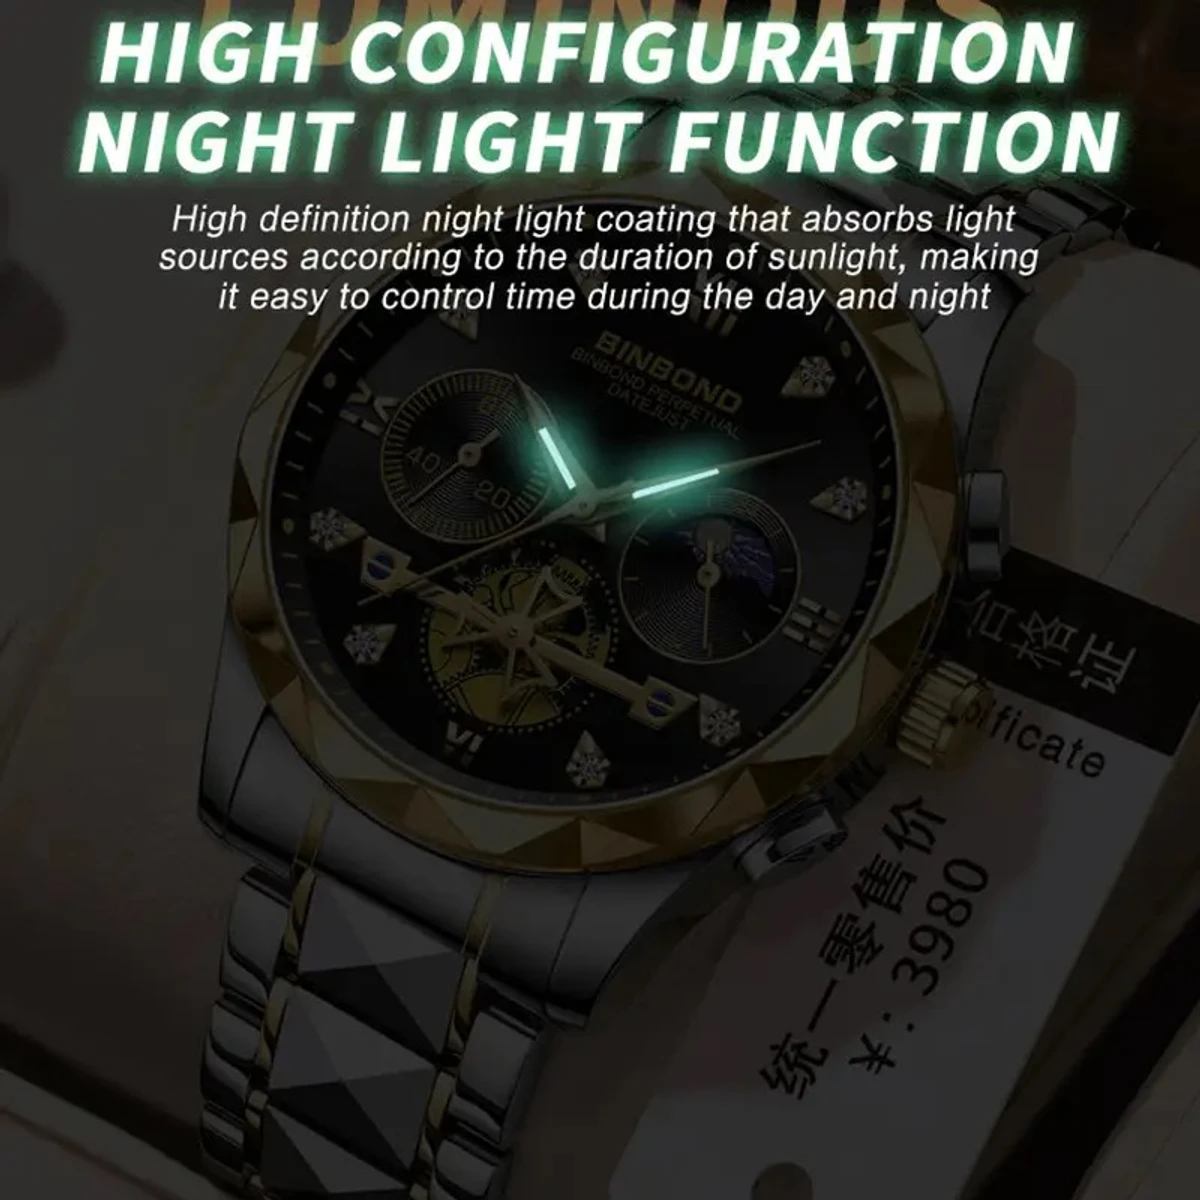 New Luxury Watch For Men Stainless Steel Waterproof Business Sport Wristwatches- Black